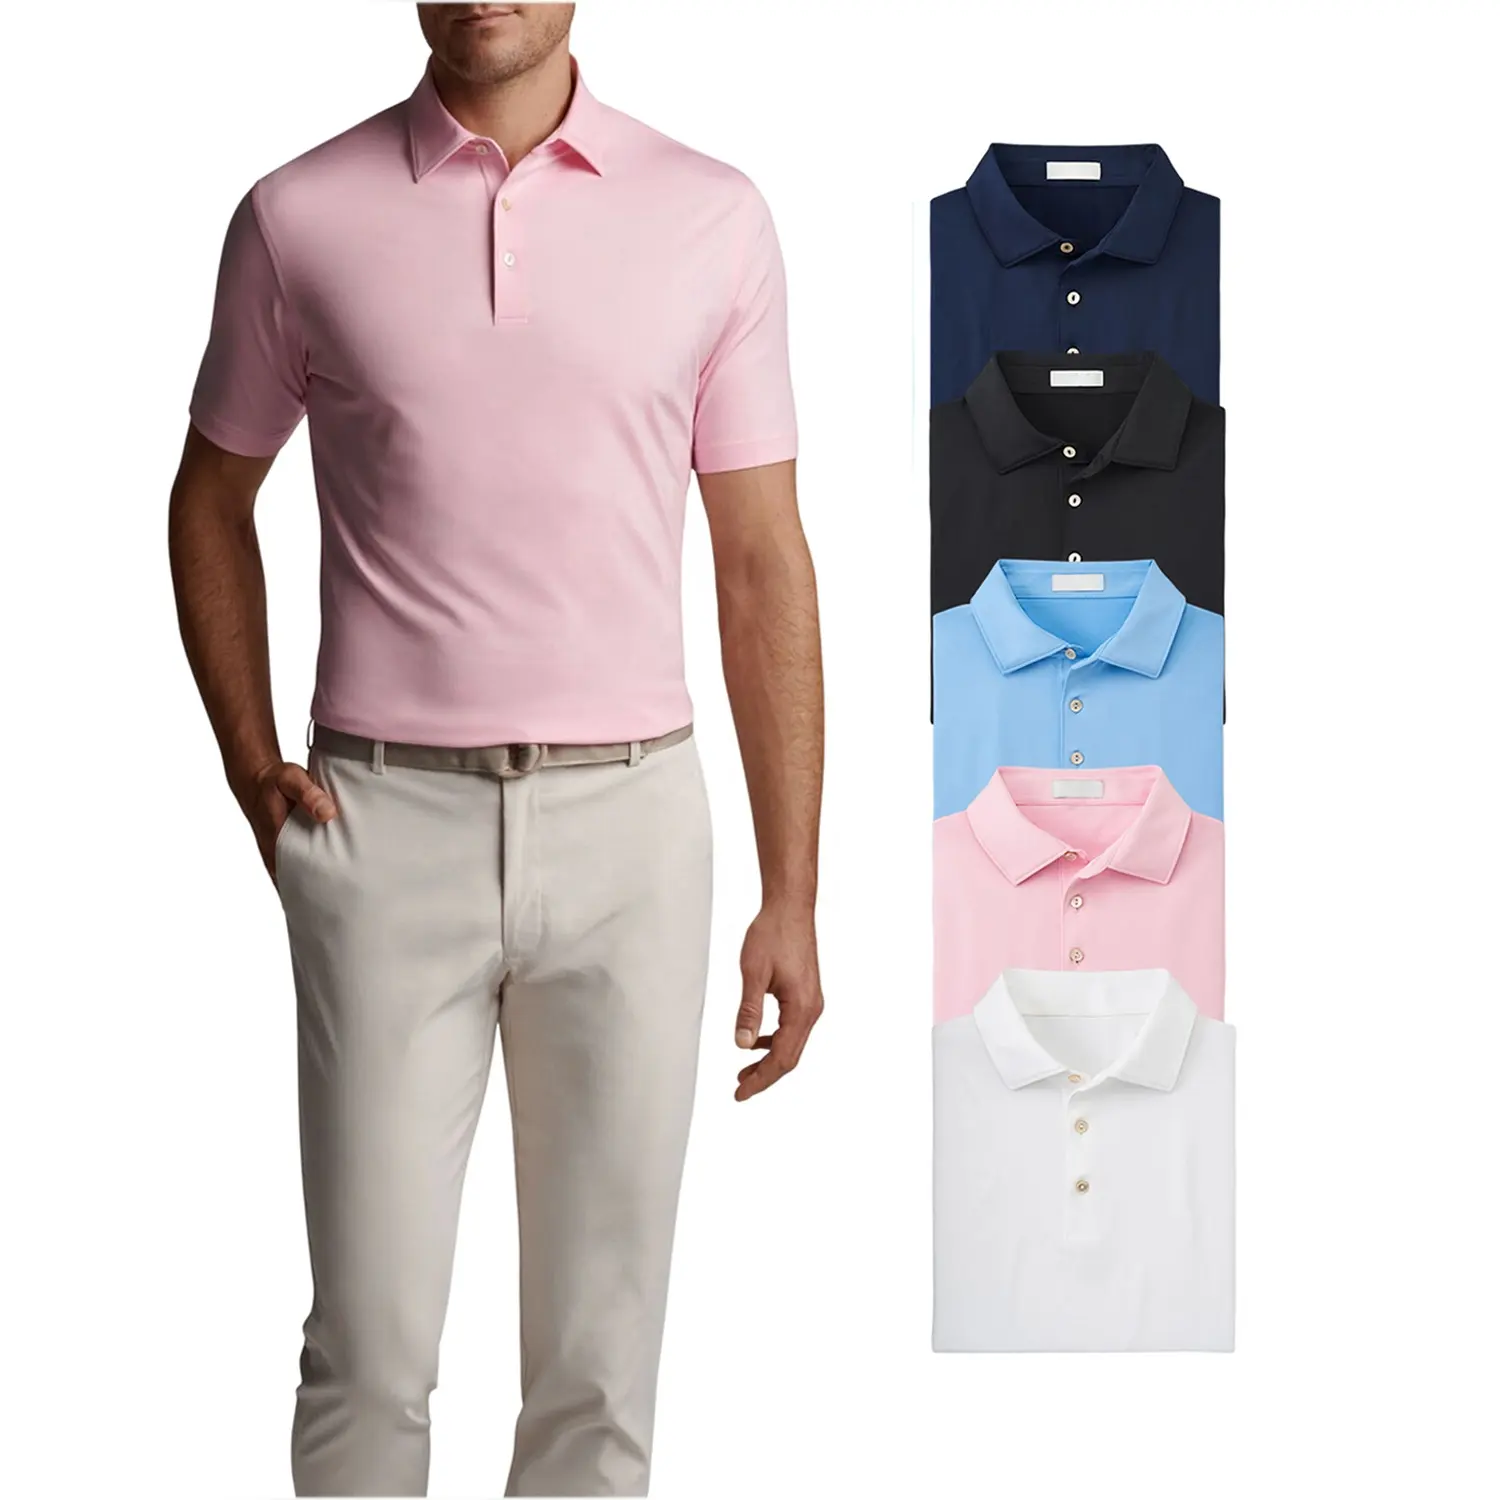 Luxus Hochwertiges Golf Polo Shirt Schnellt rockn endes Slim Fit Plain T Shirt Hersteller China